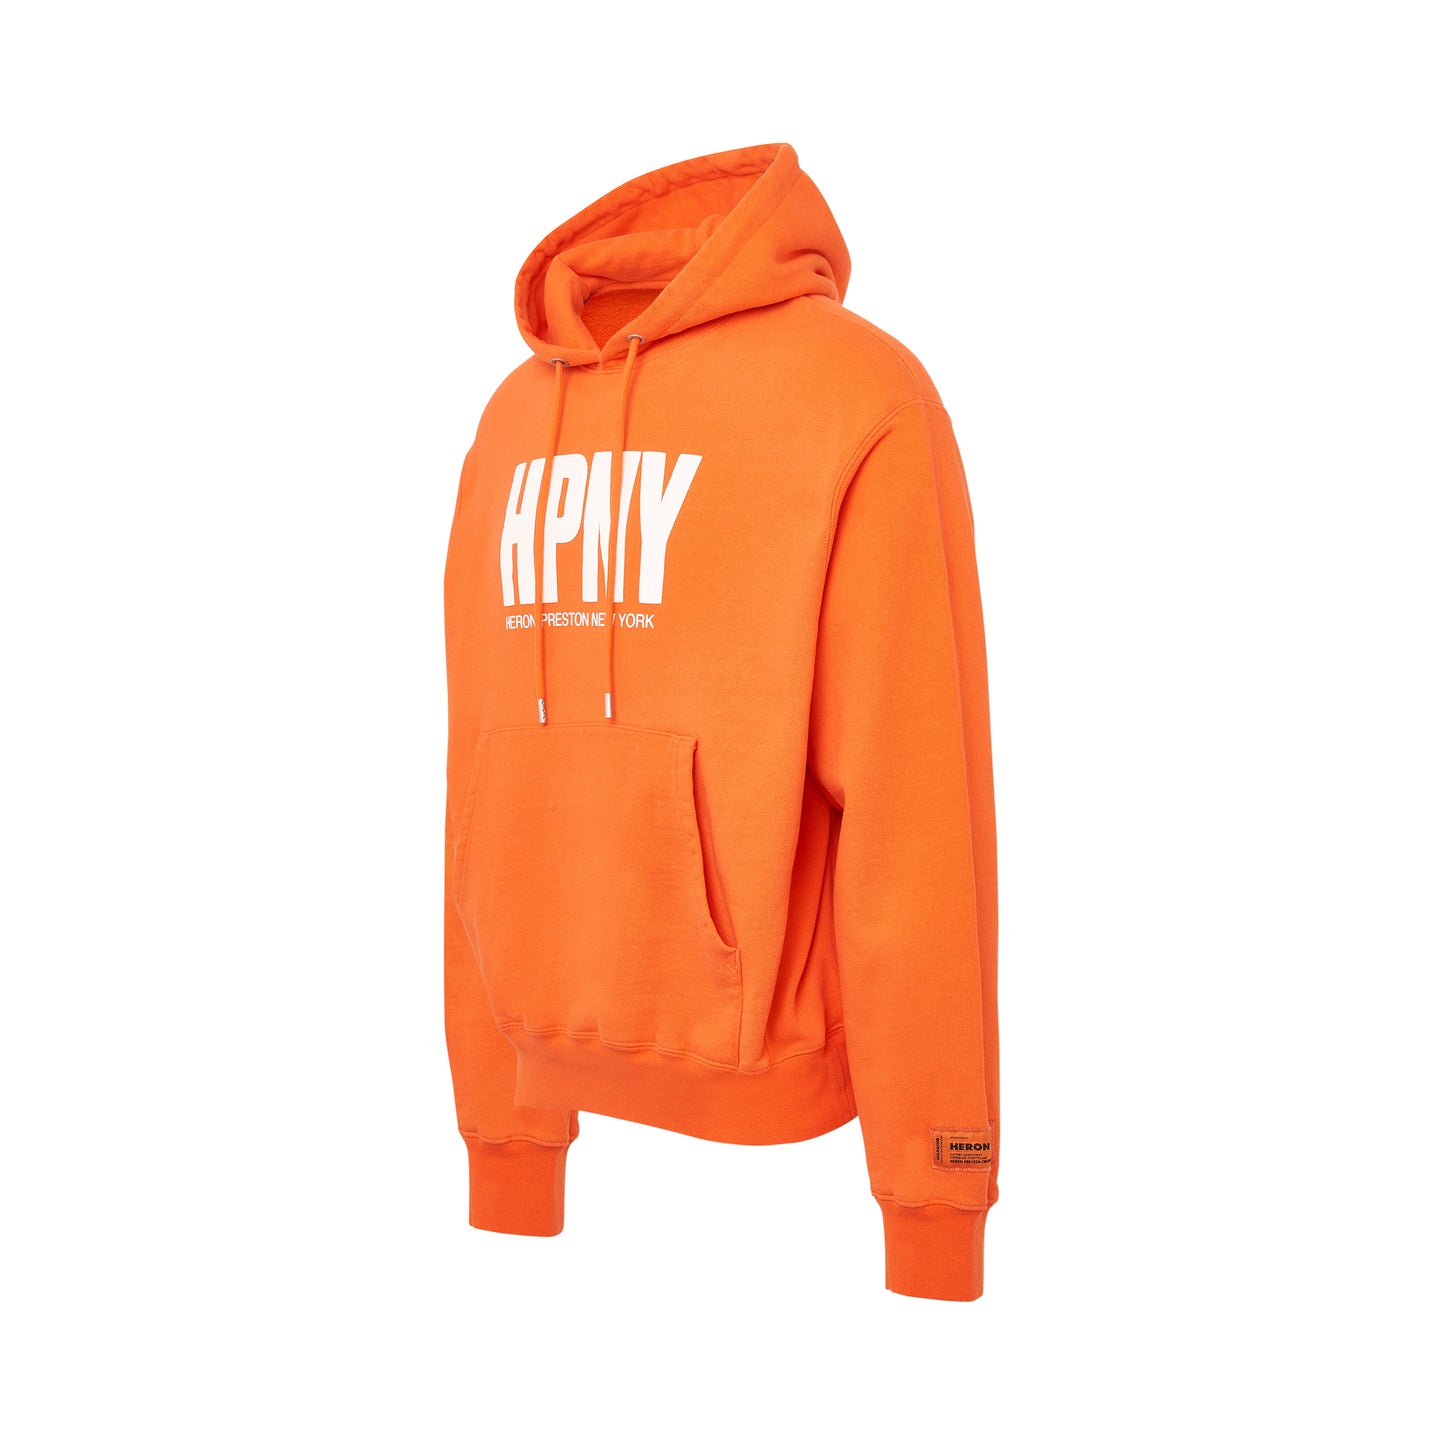 Regular HPNY Hoodie in Orange/White